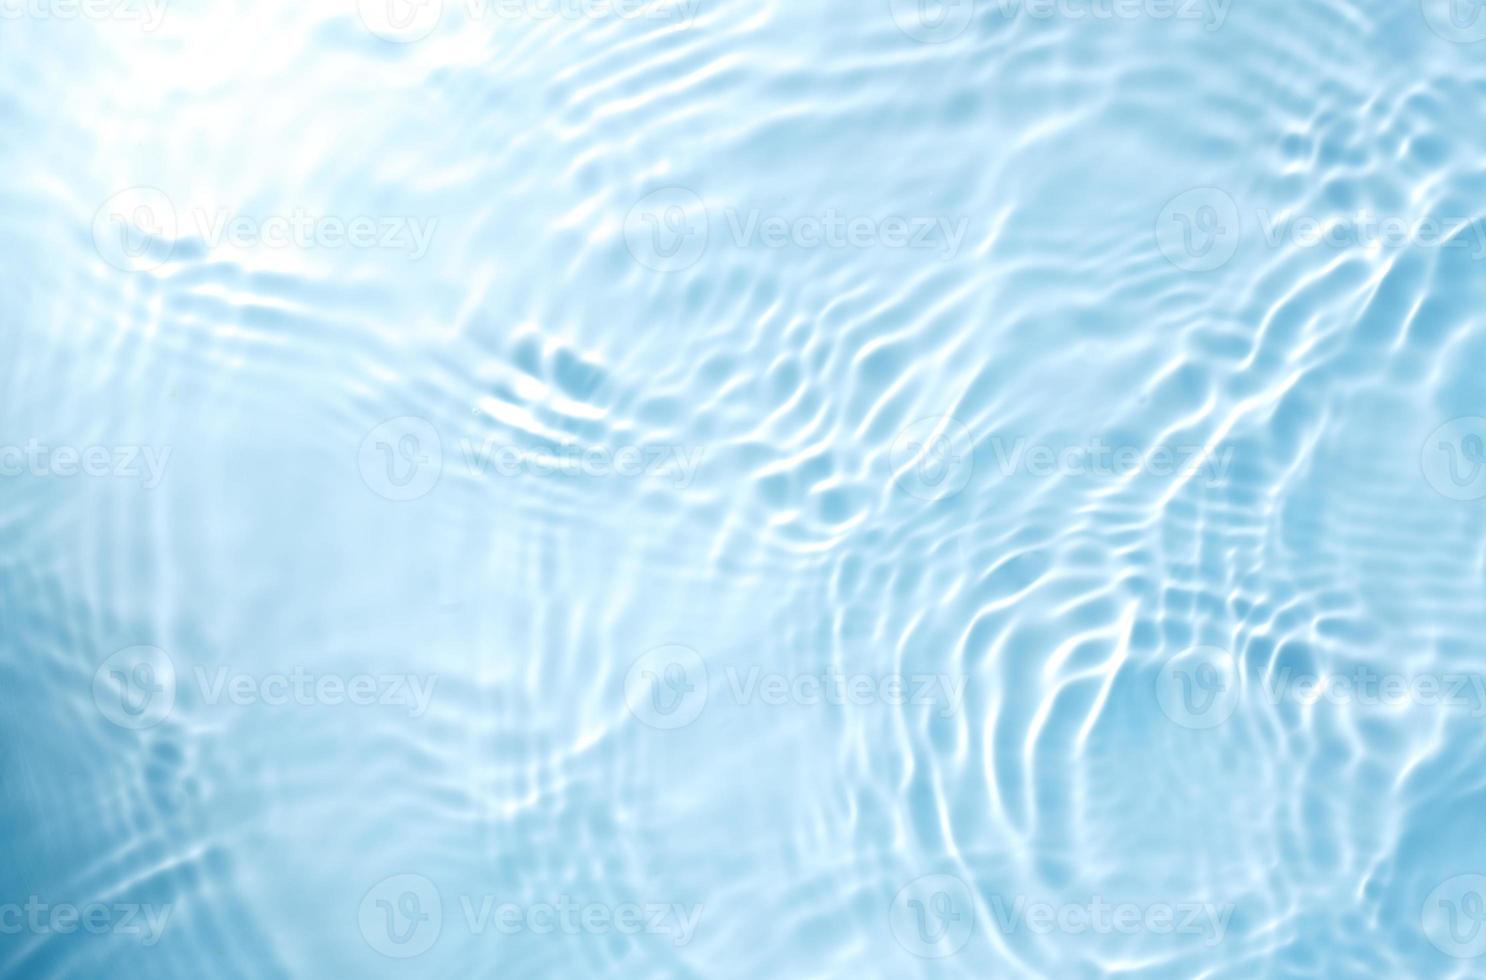 superficie de agua de color azul transparente borrosa foto